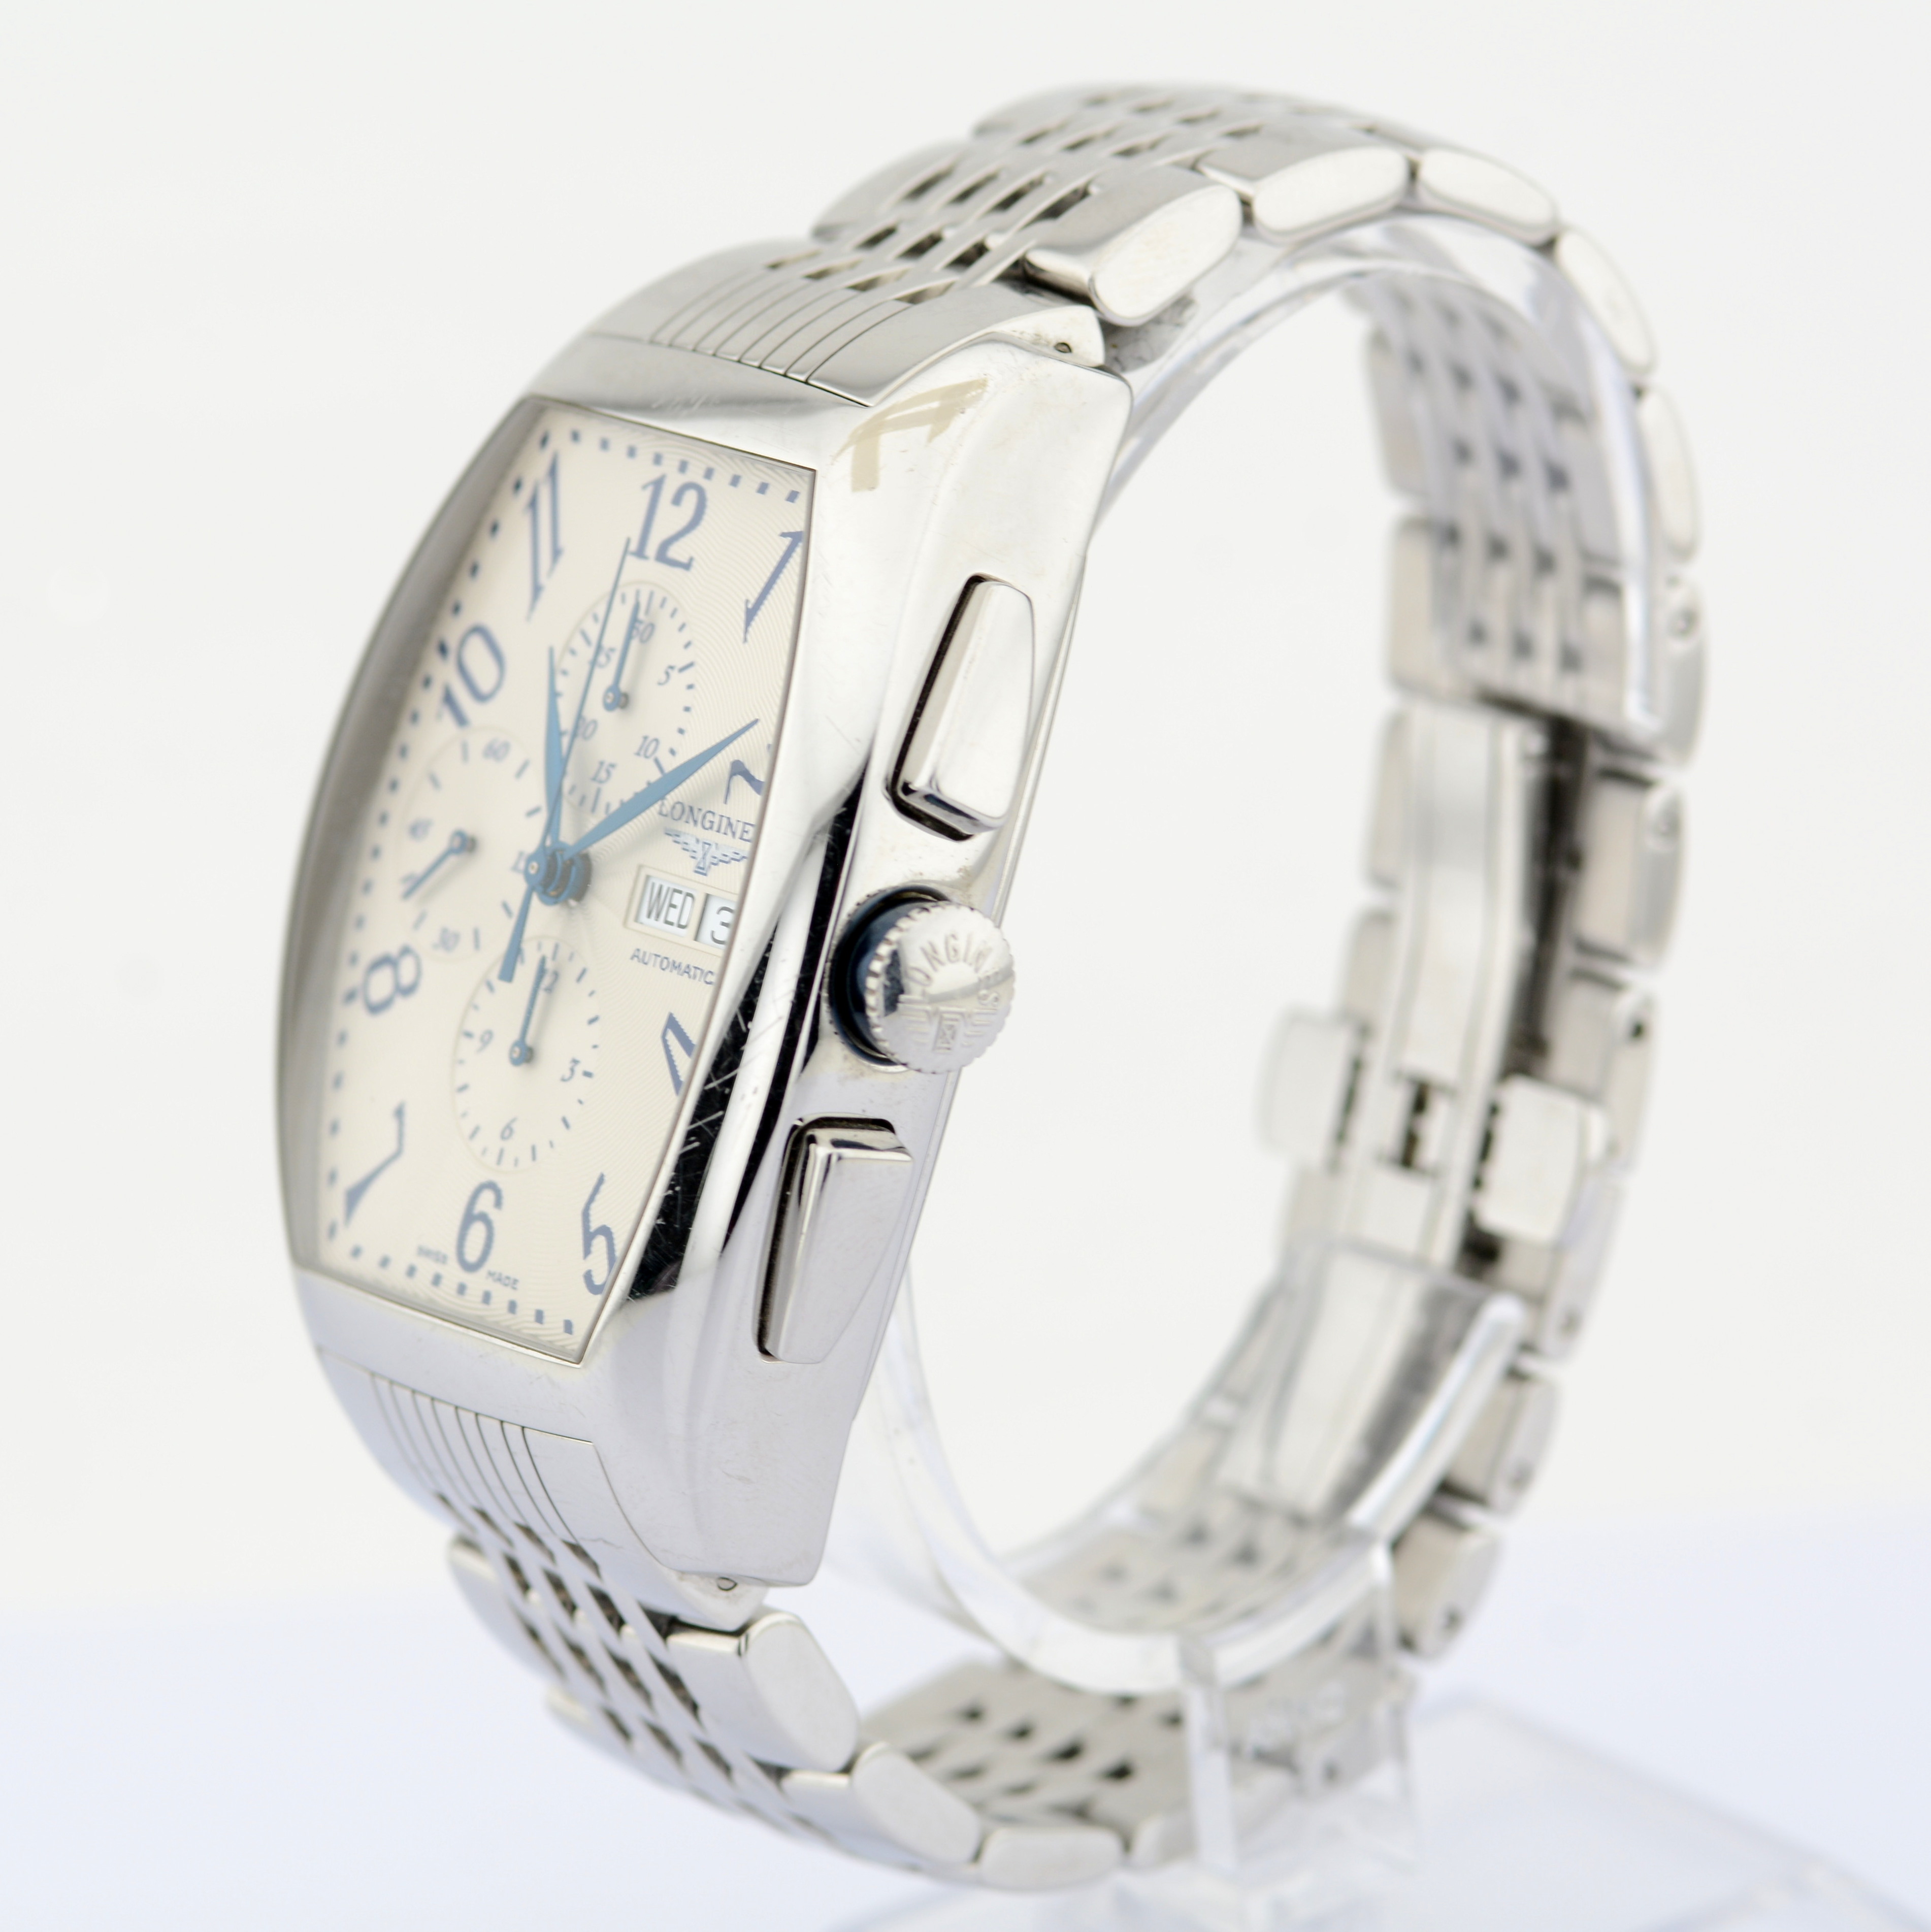 Longines / Longines Evidenza XL 56 mm Chronographe Day Date - Gentlmen's Steel Wrist Watch - Image 2 of 7